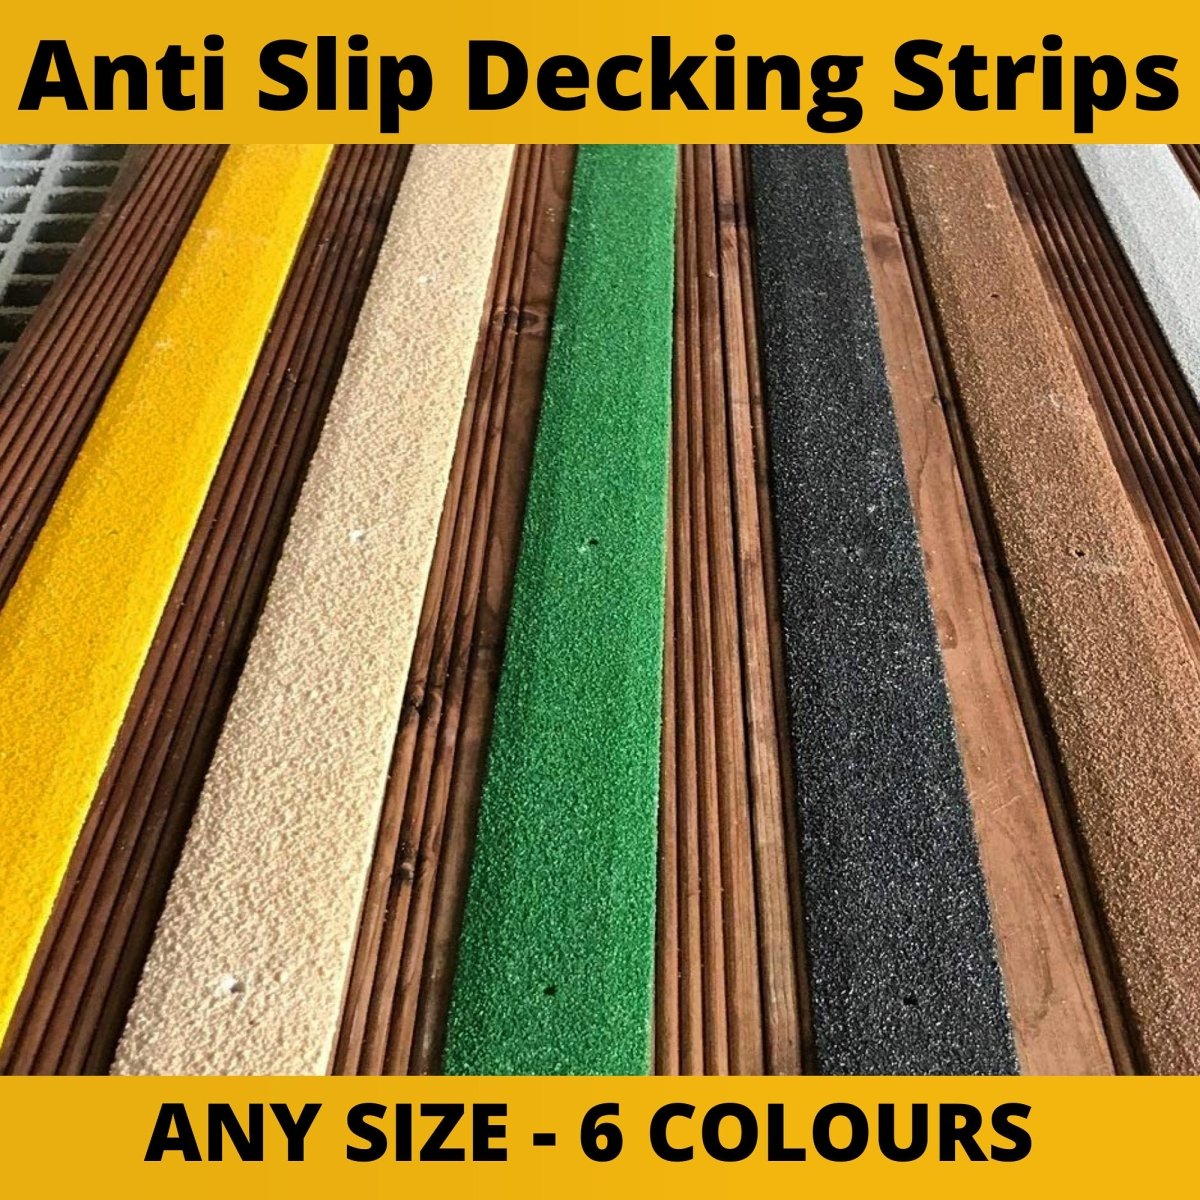 What are Anti slip decking strips? - Slips Away